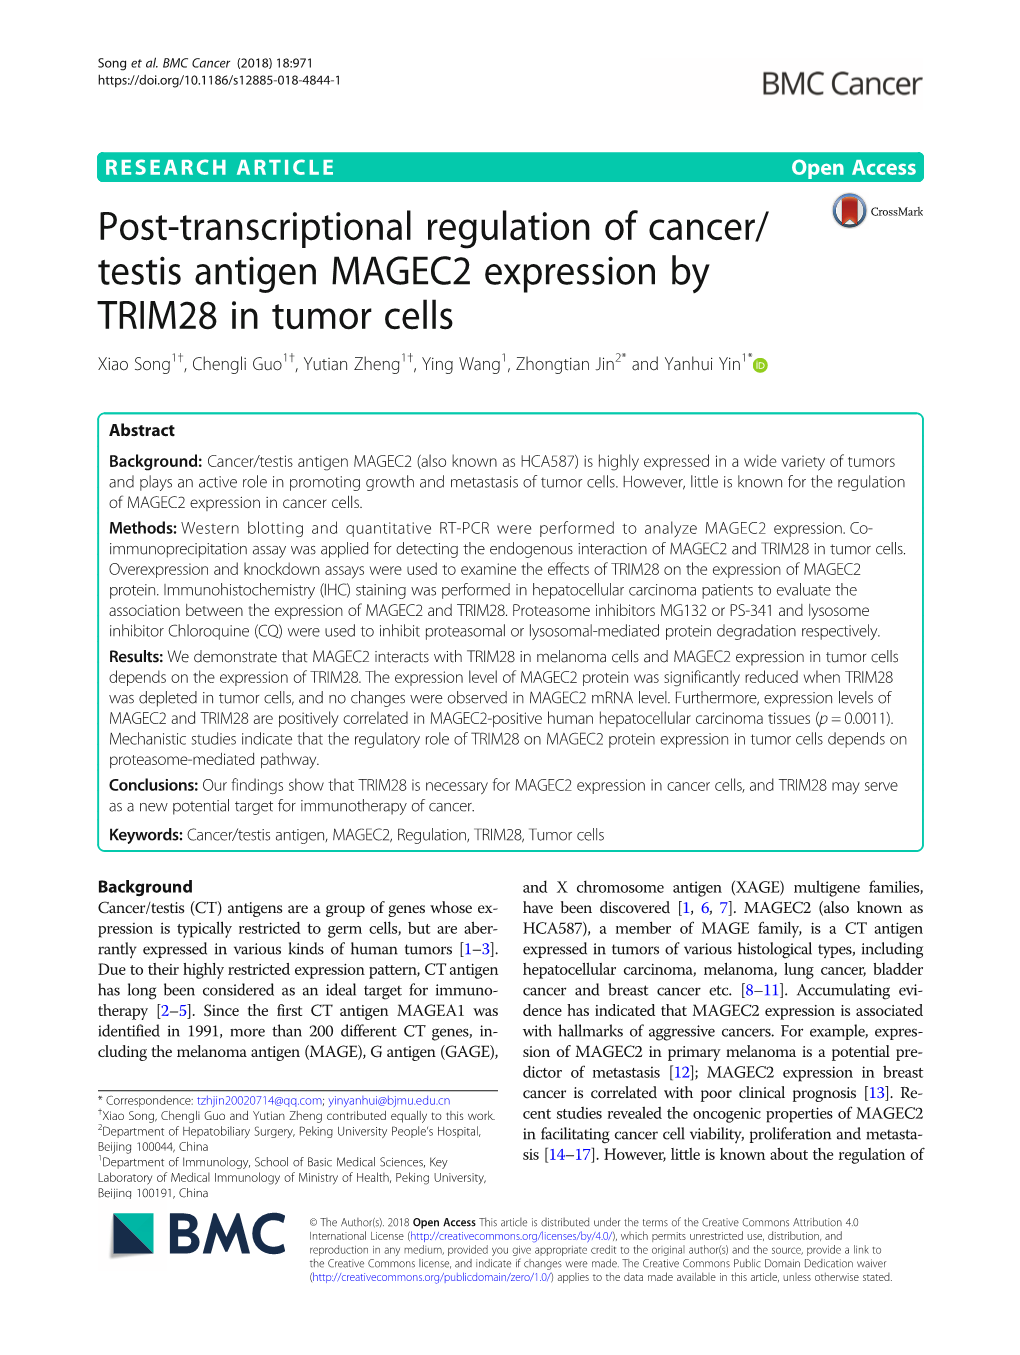 Post-Transcriptional Regulation of Cancer/Testis Antigen MAGEC2